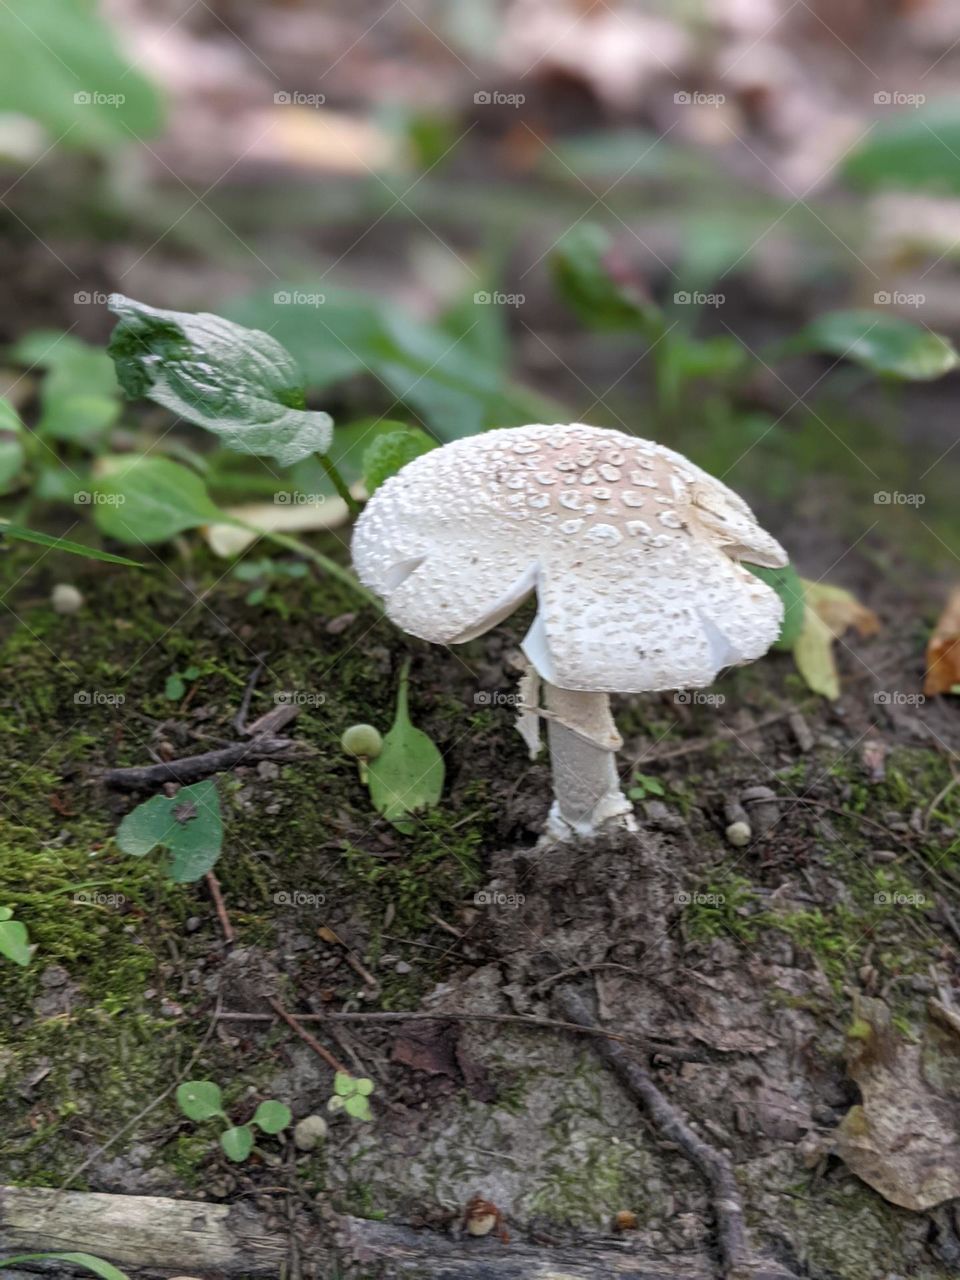 another mushroom